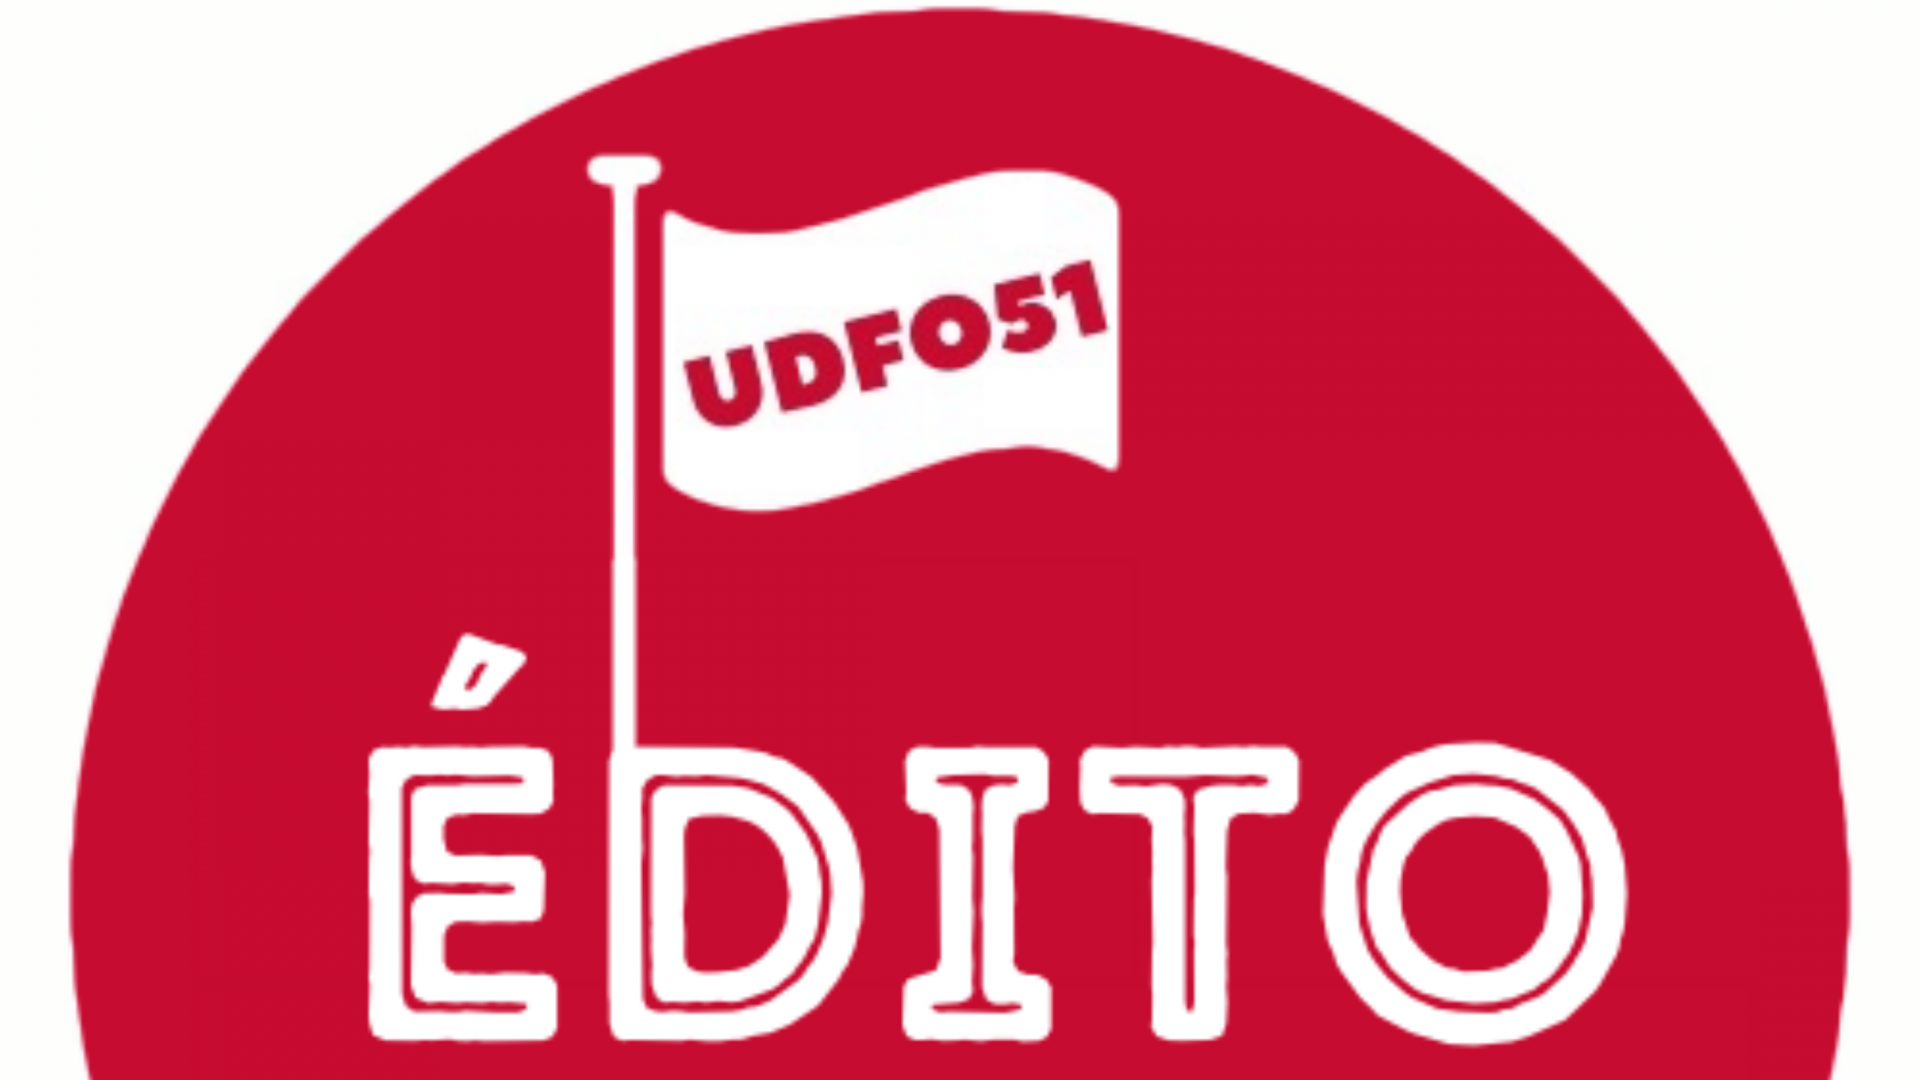 Edito udfo51 logo2